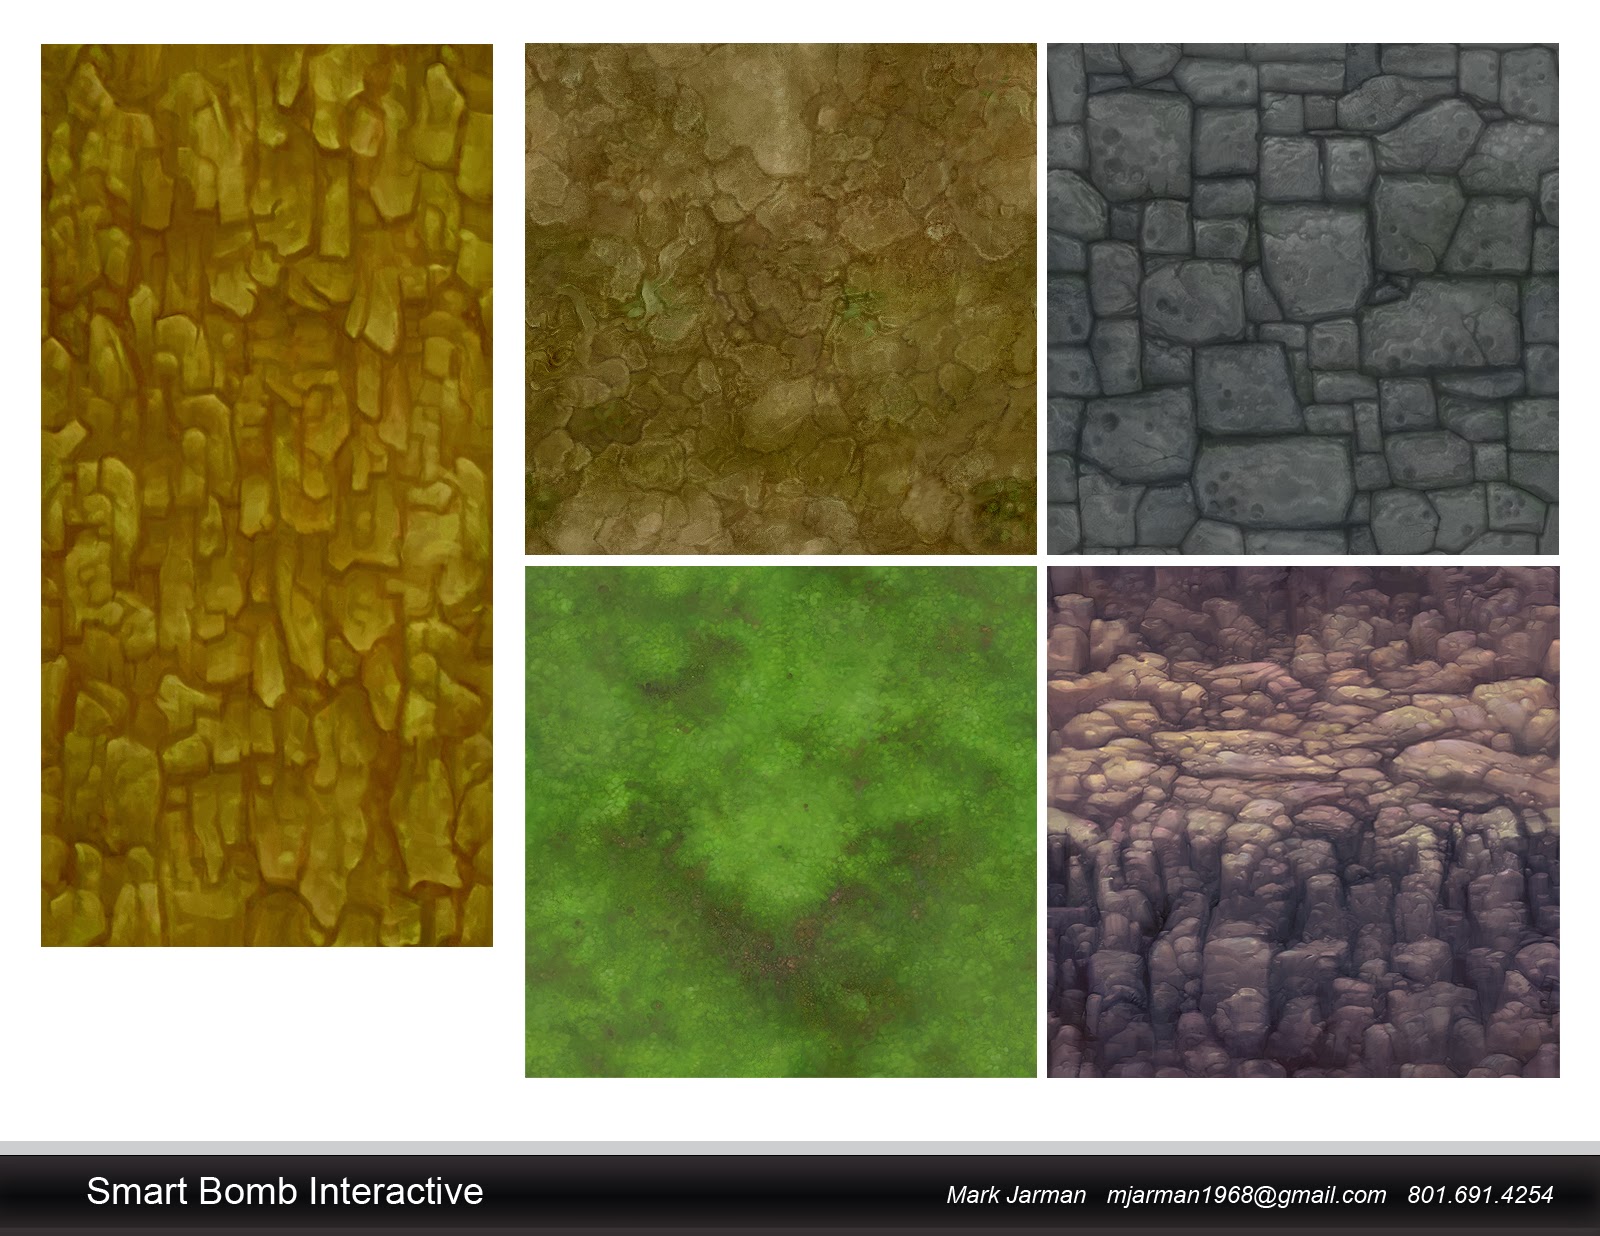 Mark Jarman's Game Portfolio: 3-D and Texture Maps